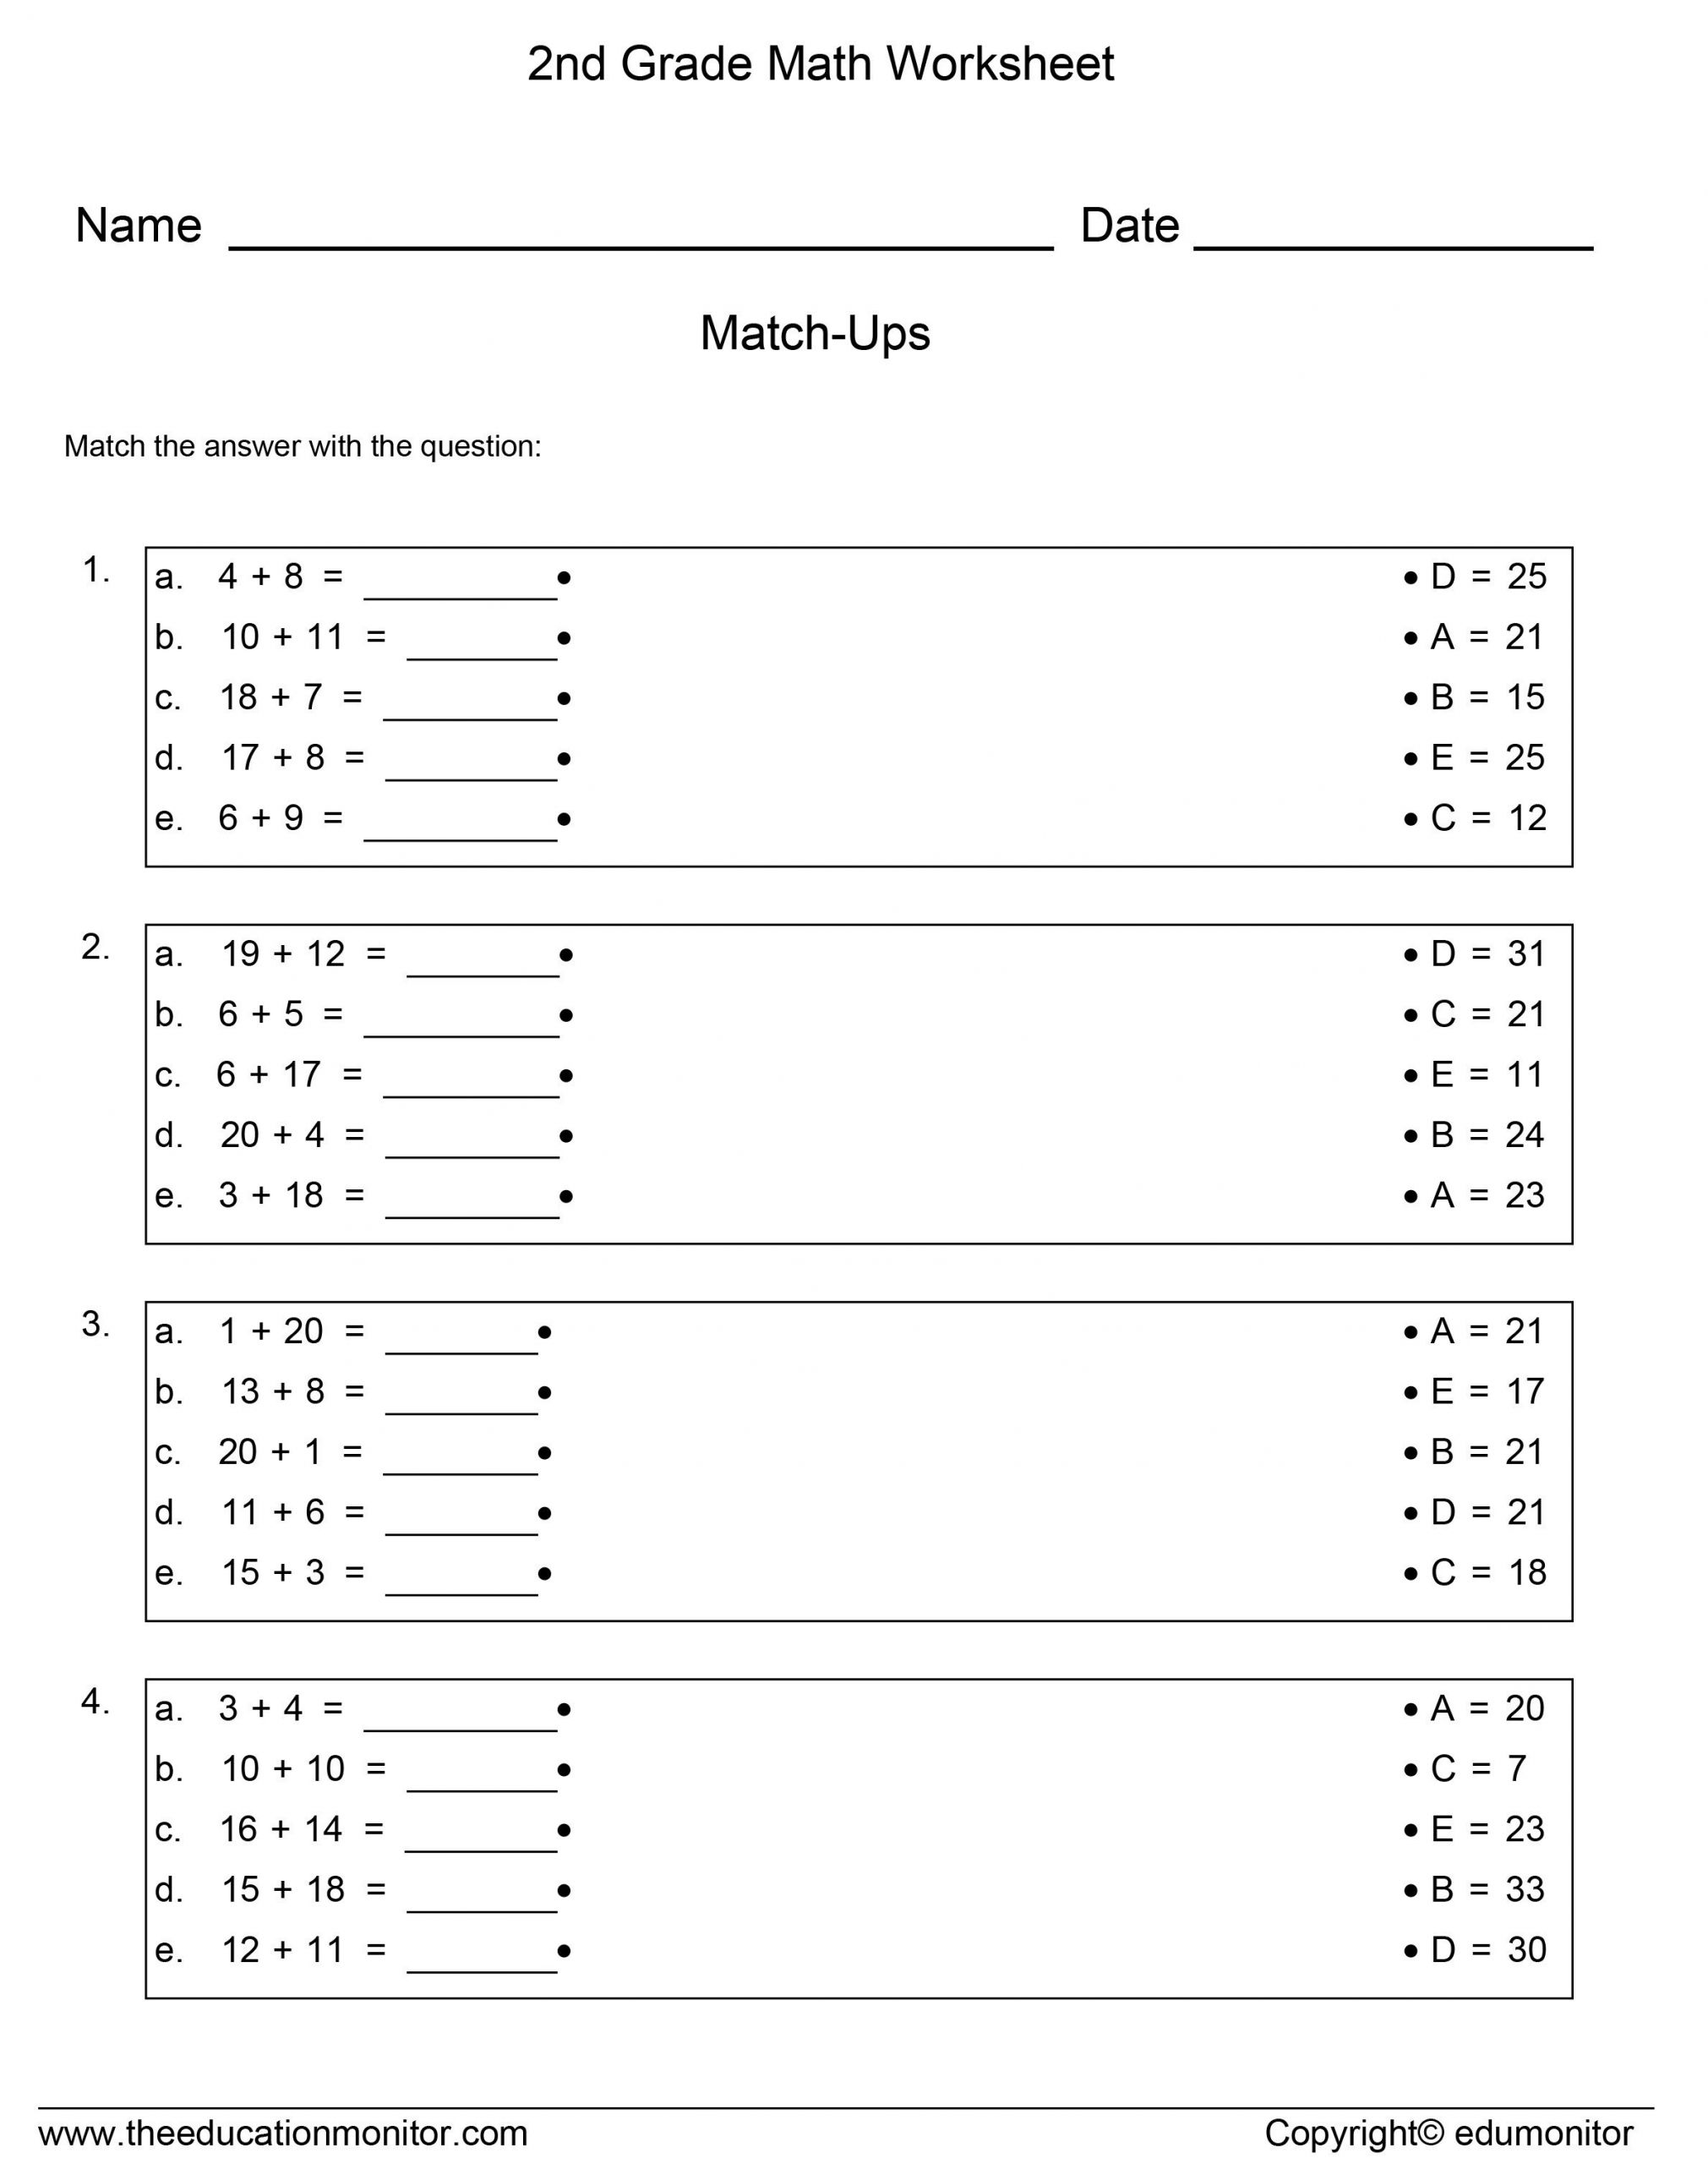 Free Math Worksheets Third Grade 3 Division Division Facts 2 or 3